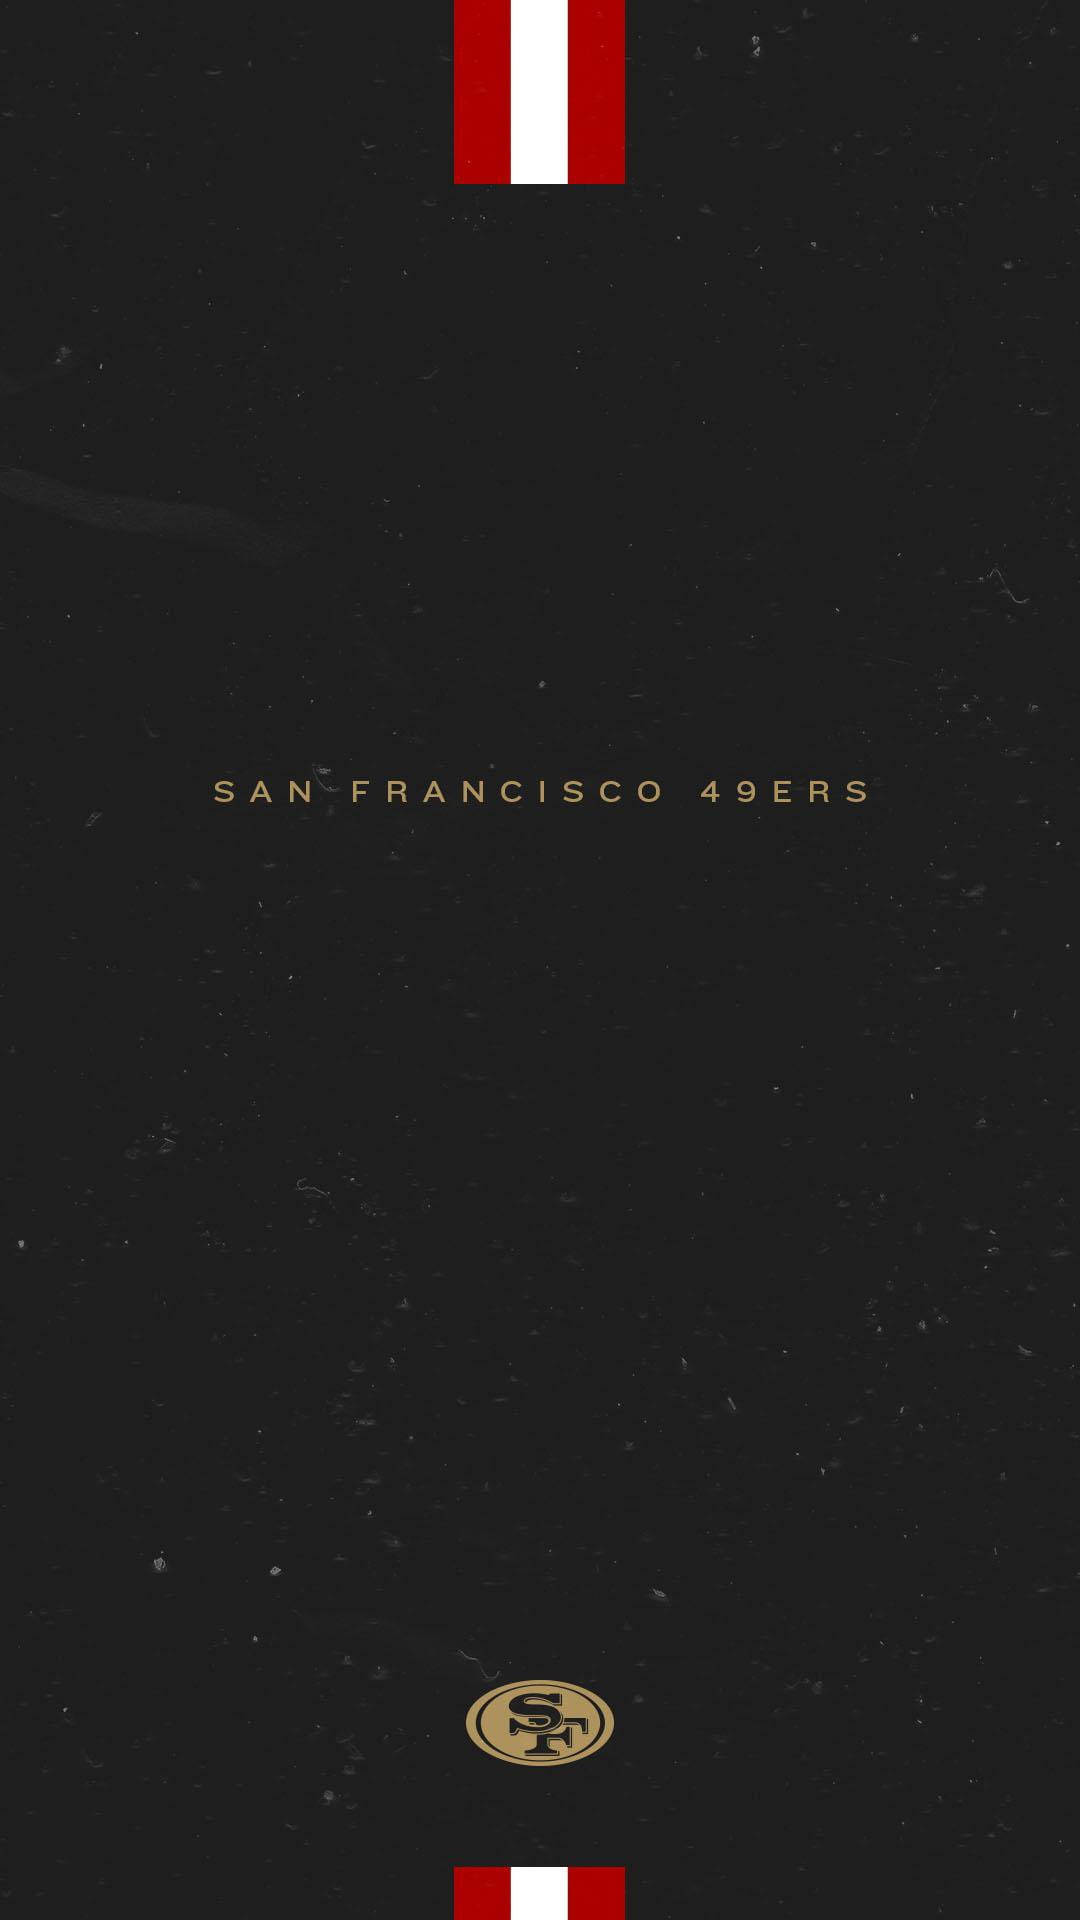 San Francisco 49ers Iphone Wallpaper